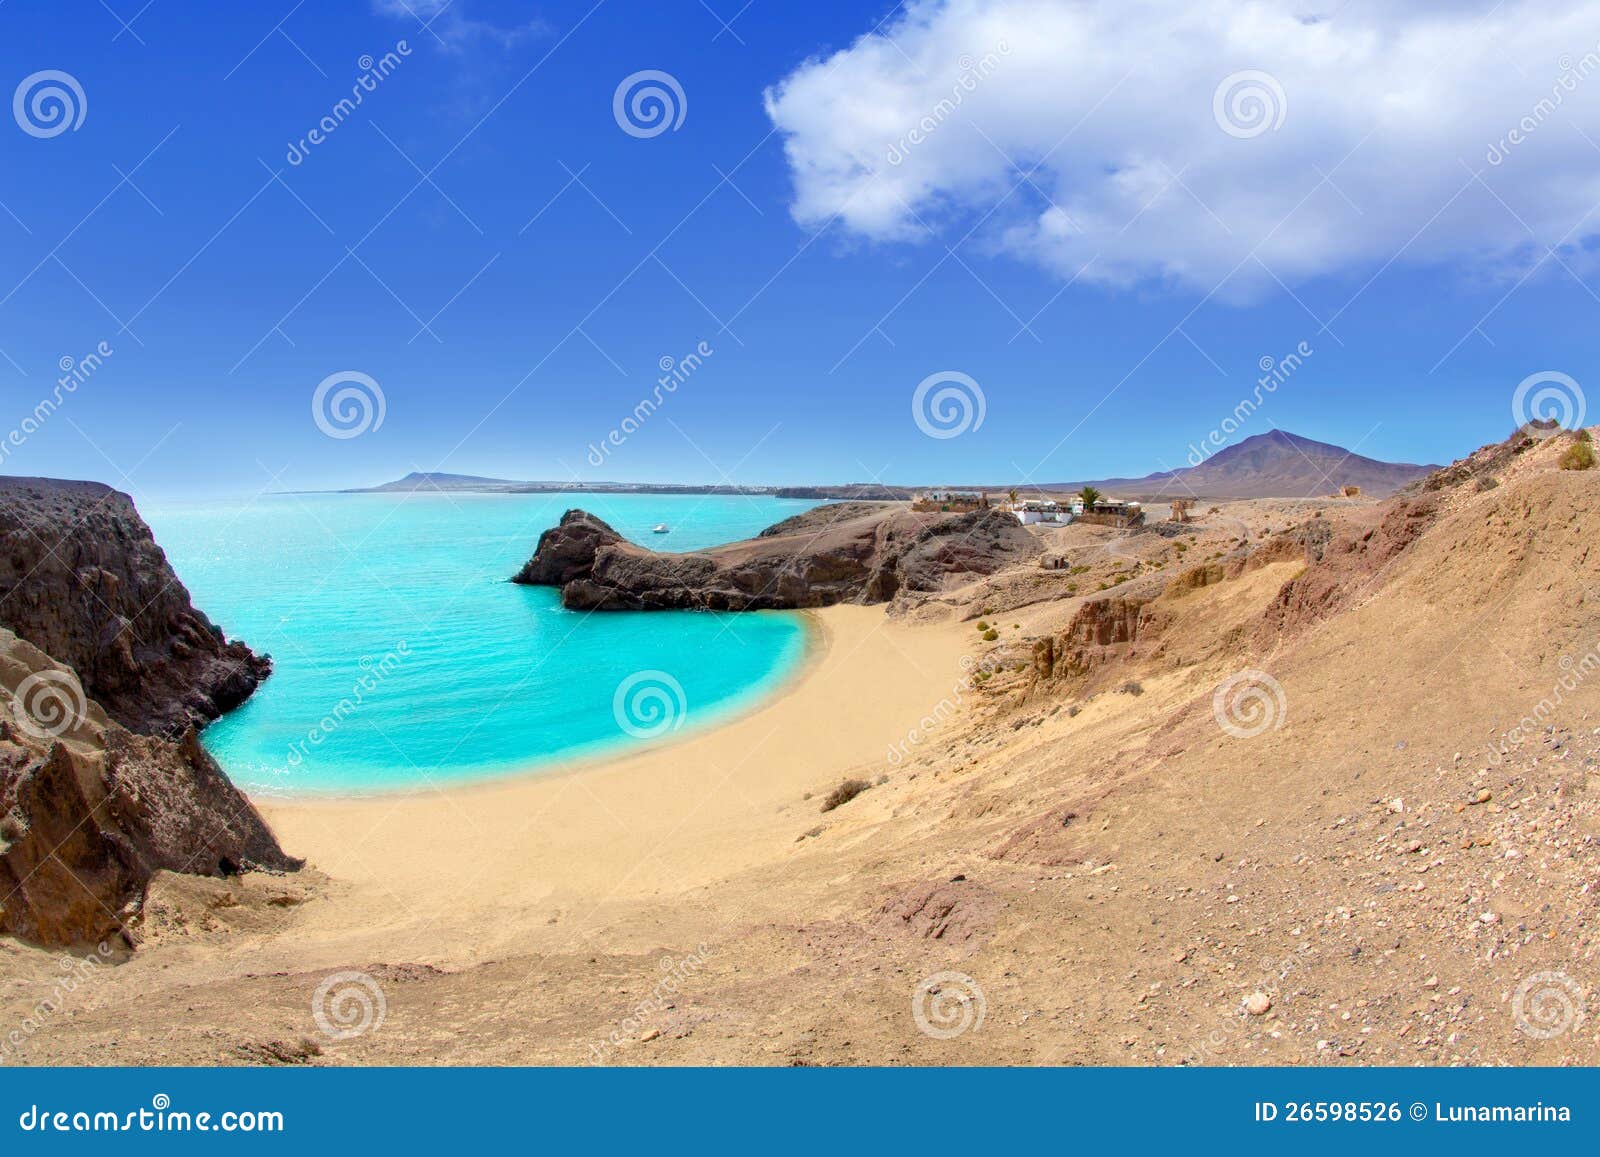 lanzarote papagayo turquoise beach and ajaches